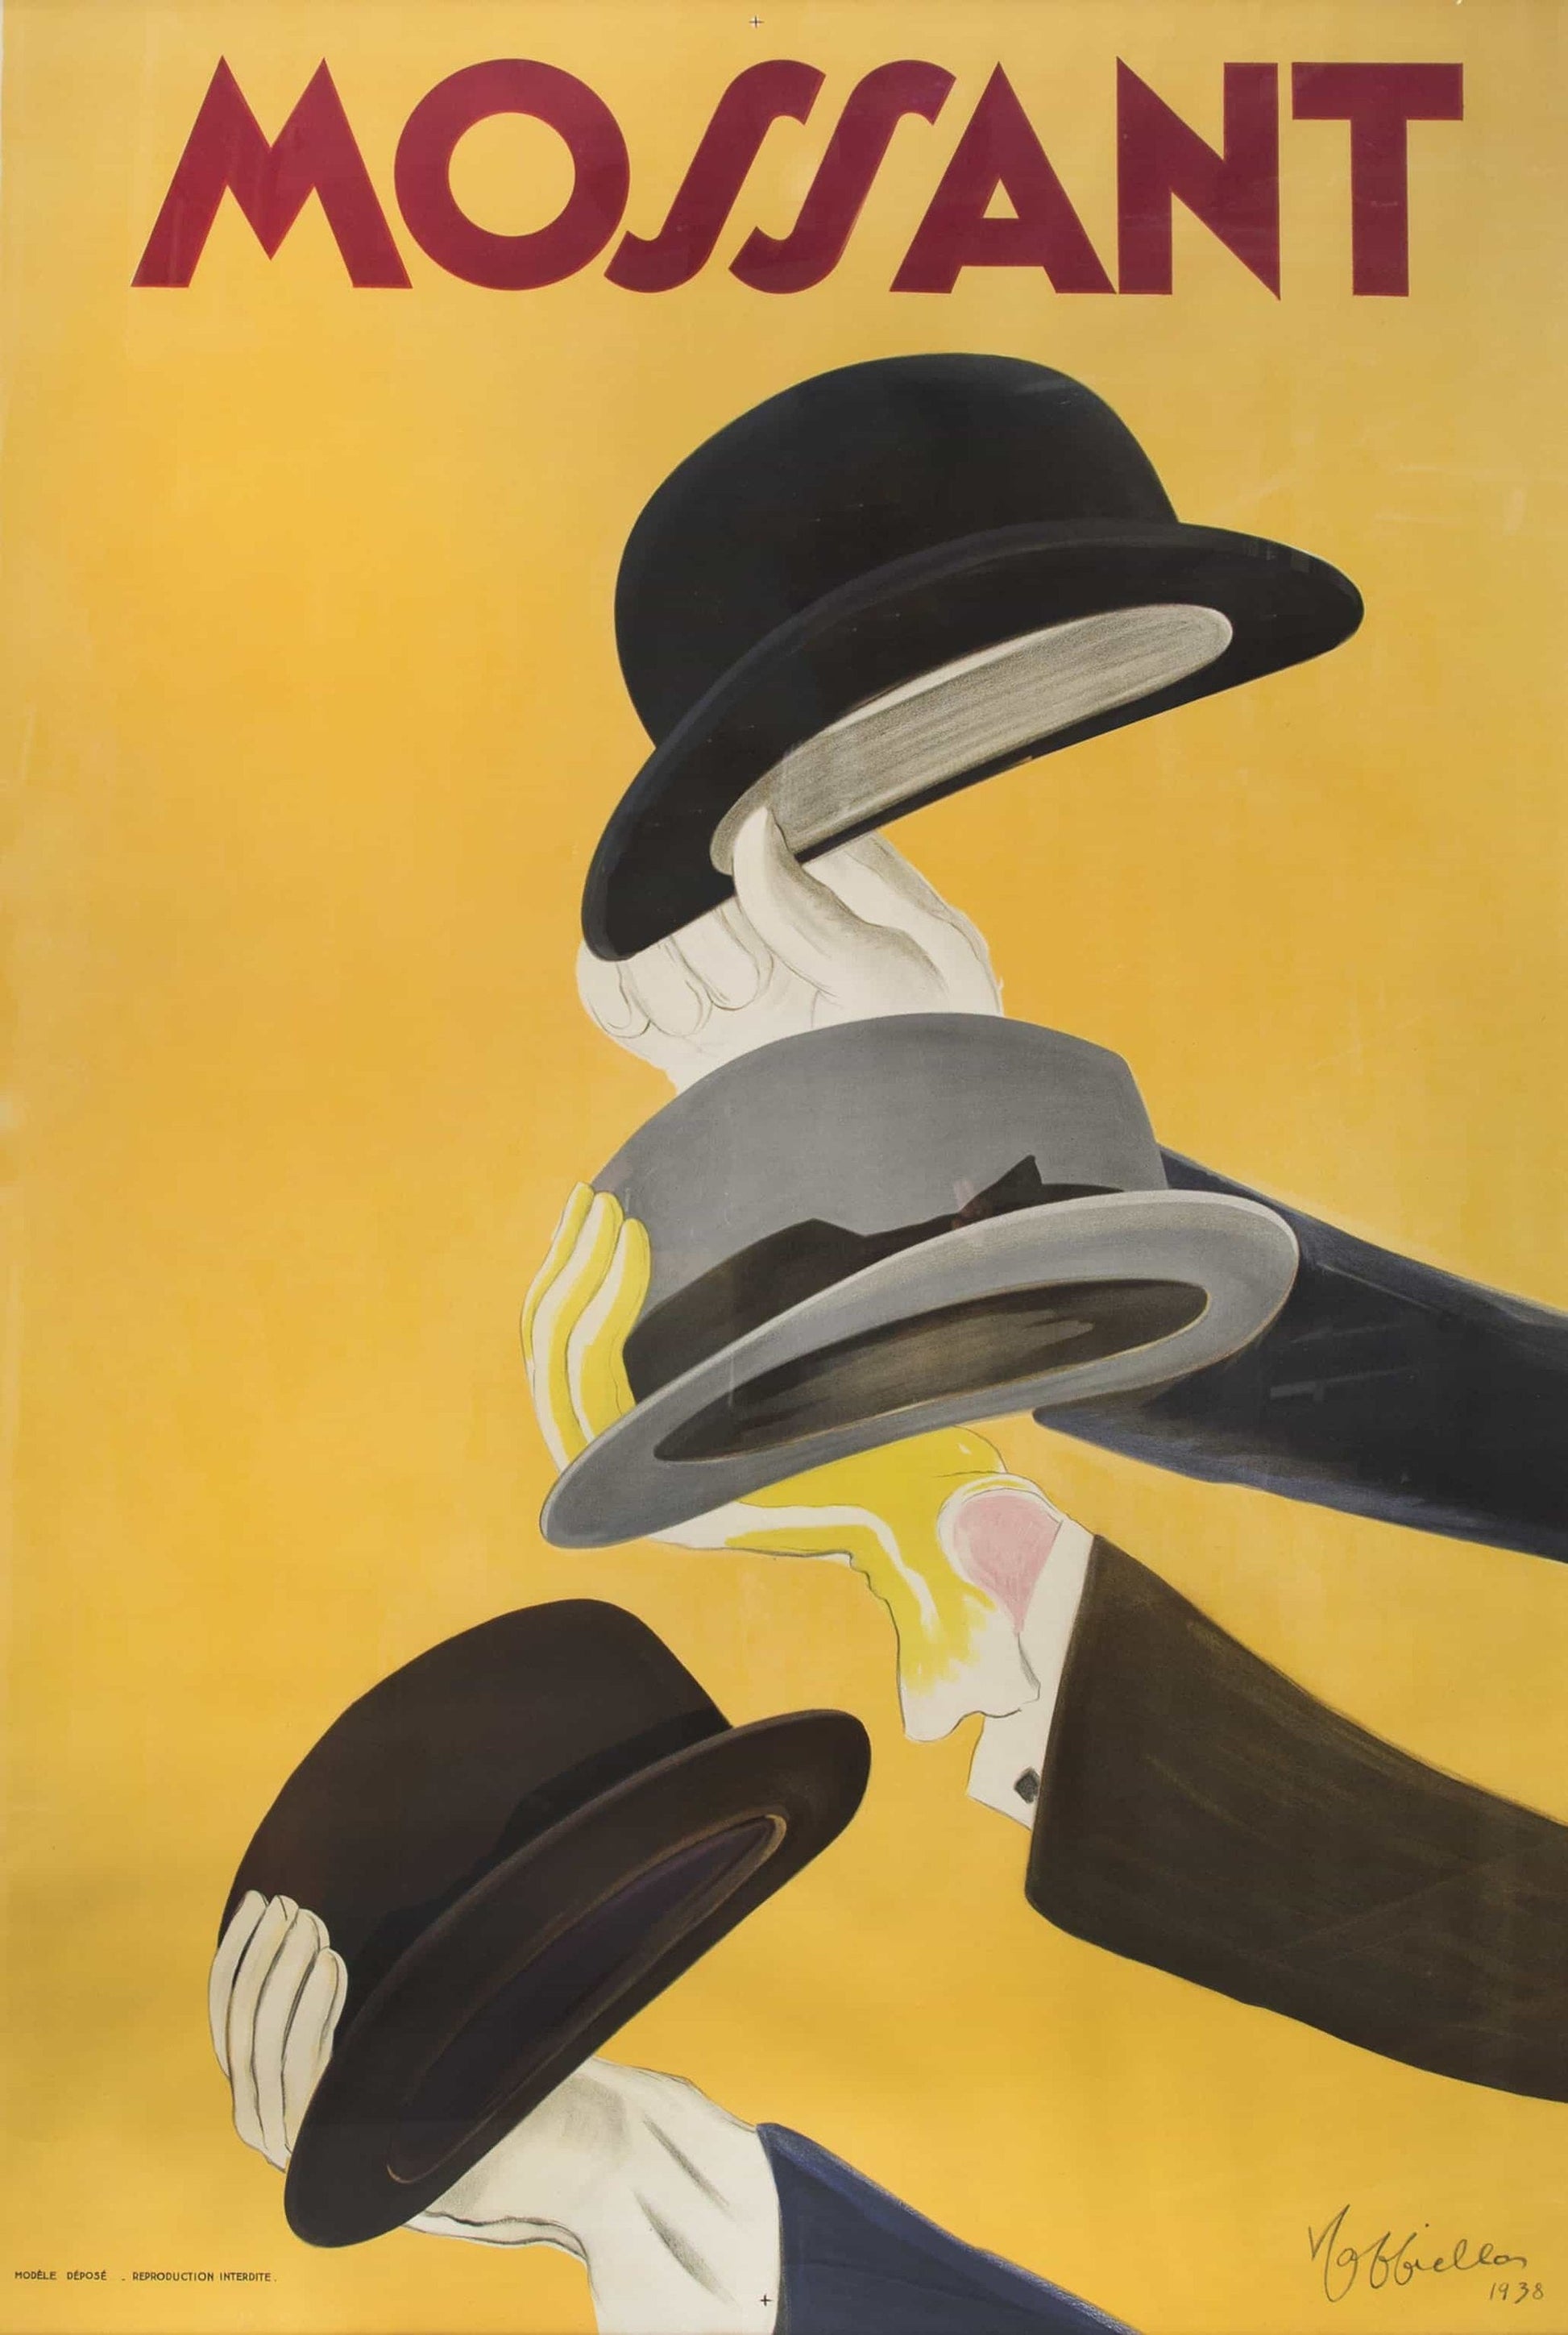 Mossant Hats Poster (1930s) | Leonetto Cappiello Posters, Prints, & Visual Artwork The Trumpet Shop   